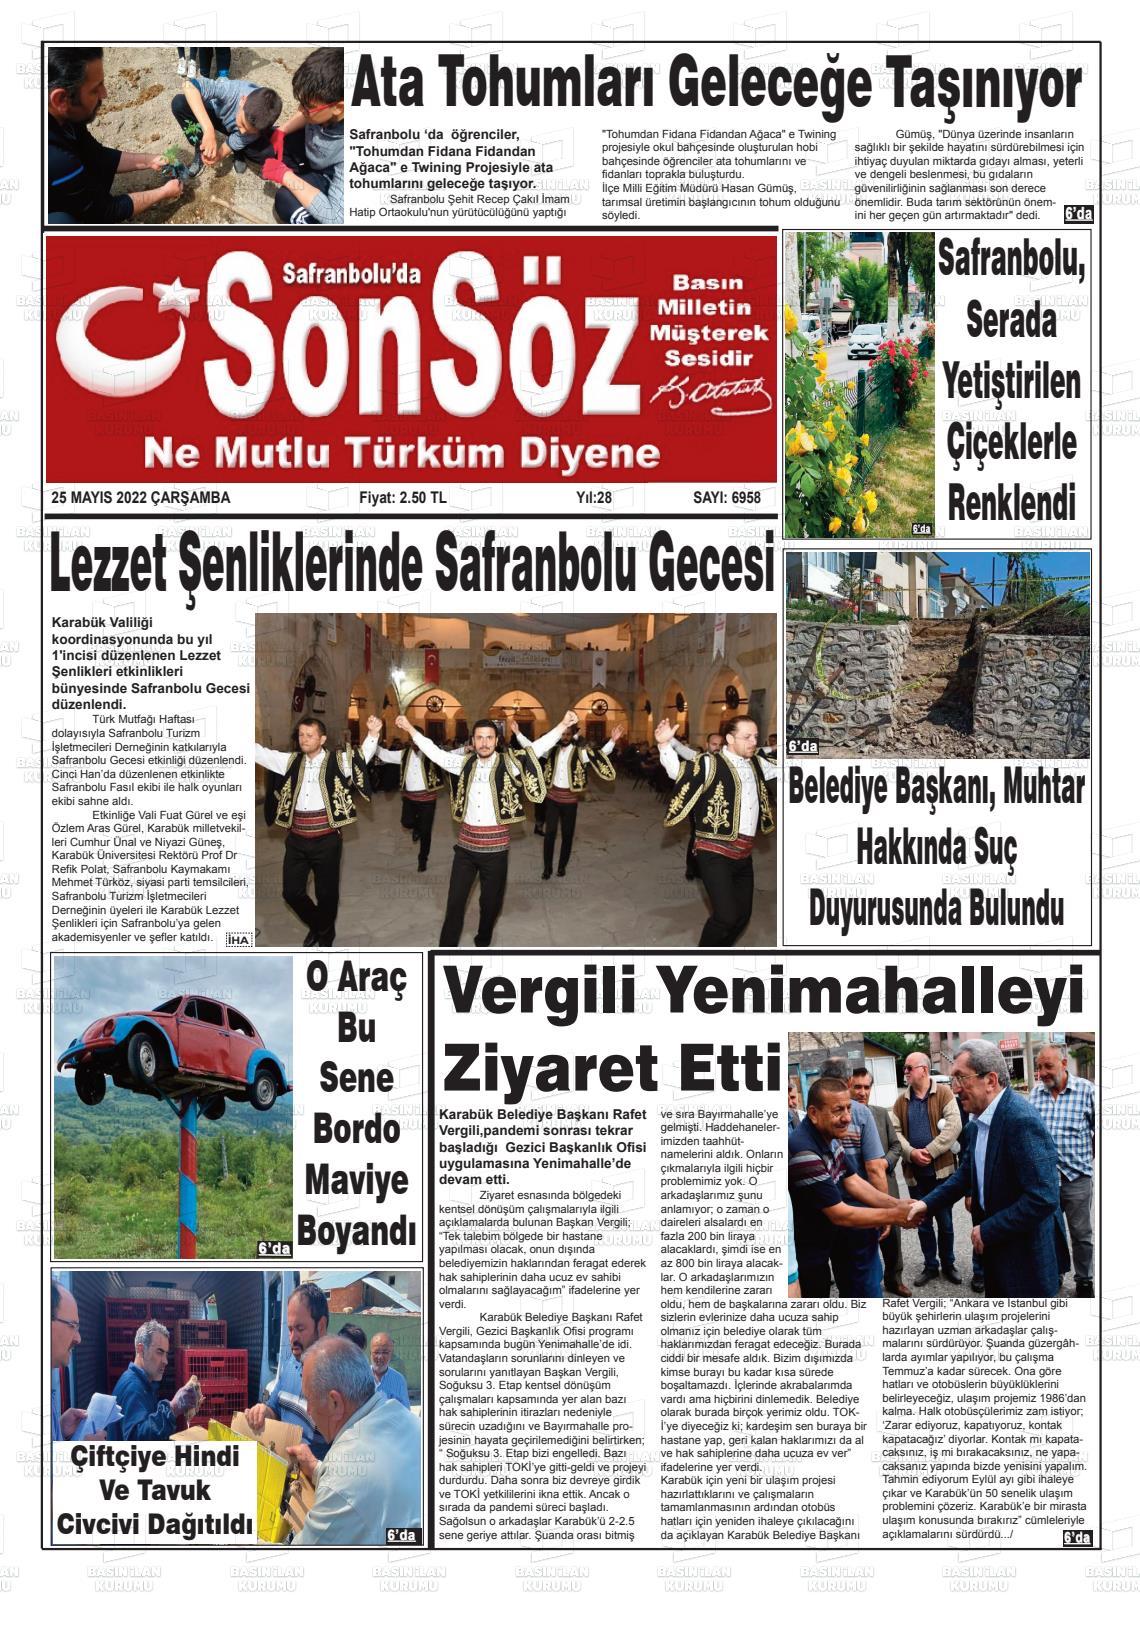 25 Mayıs 2022 Safranboluda Sonsöz Gazete Manşeti